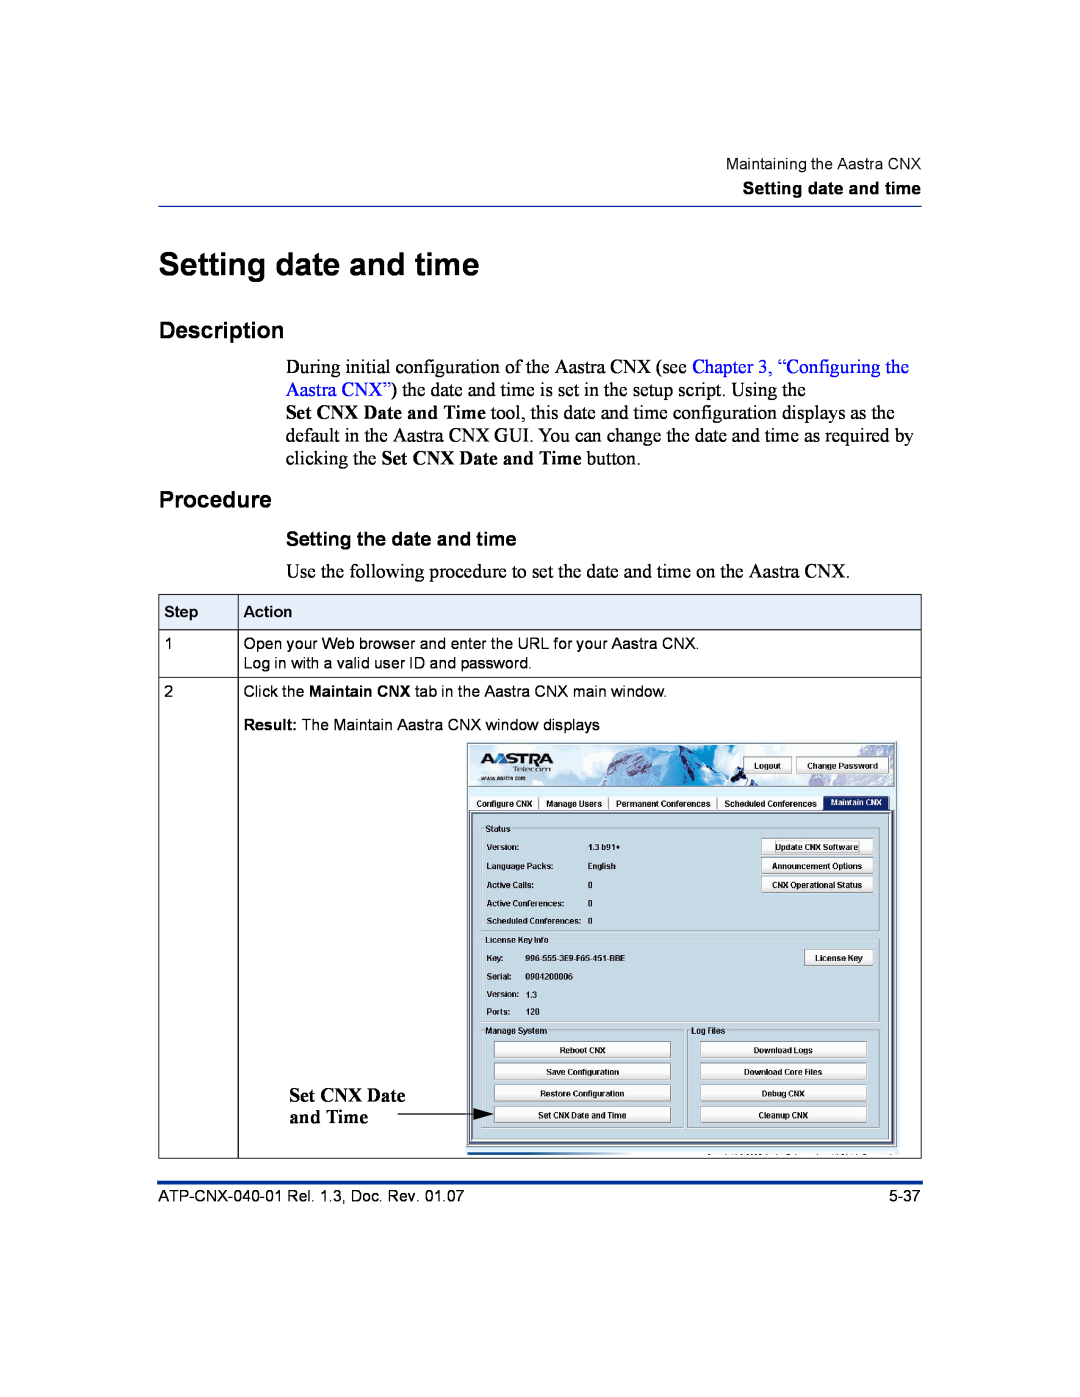 Aastra Telecom ATP-CNX-040-01 manual Setting date and time, Setting the date and time, Set CNX Date and Time, Description 